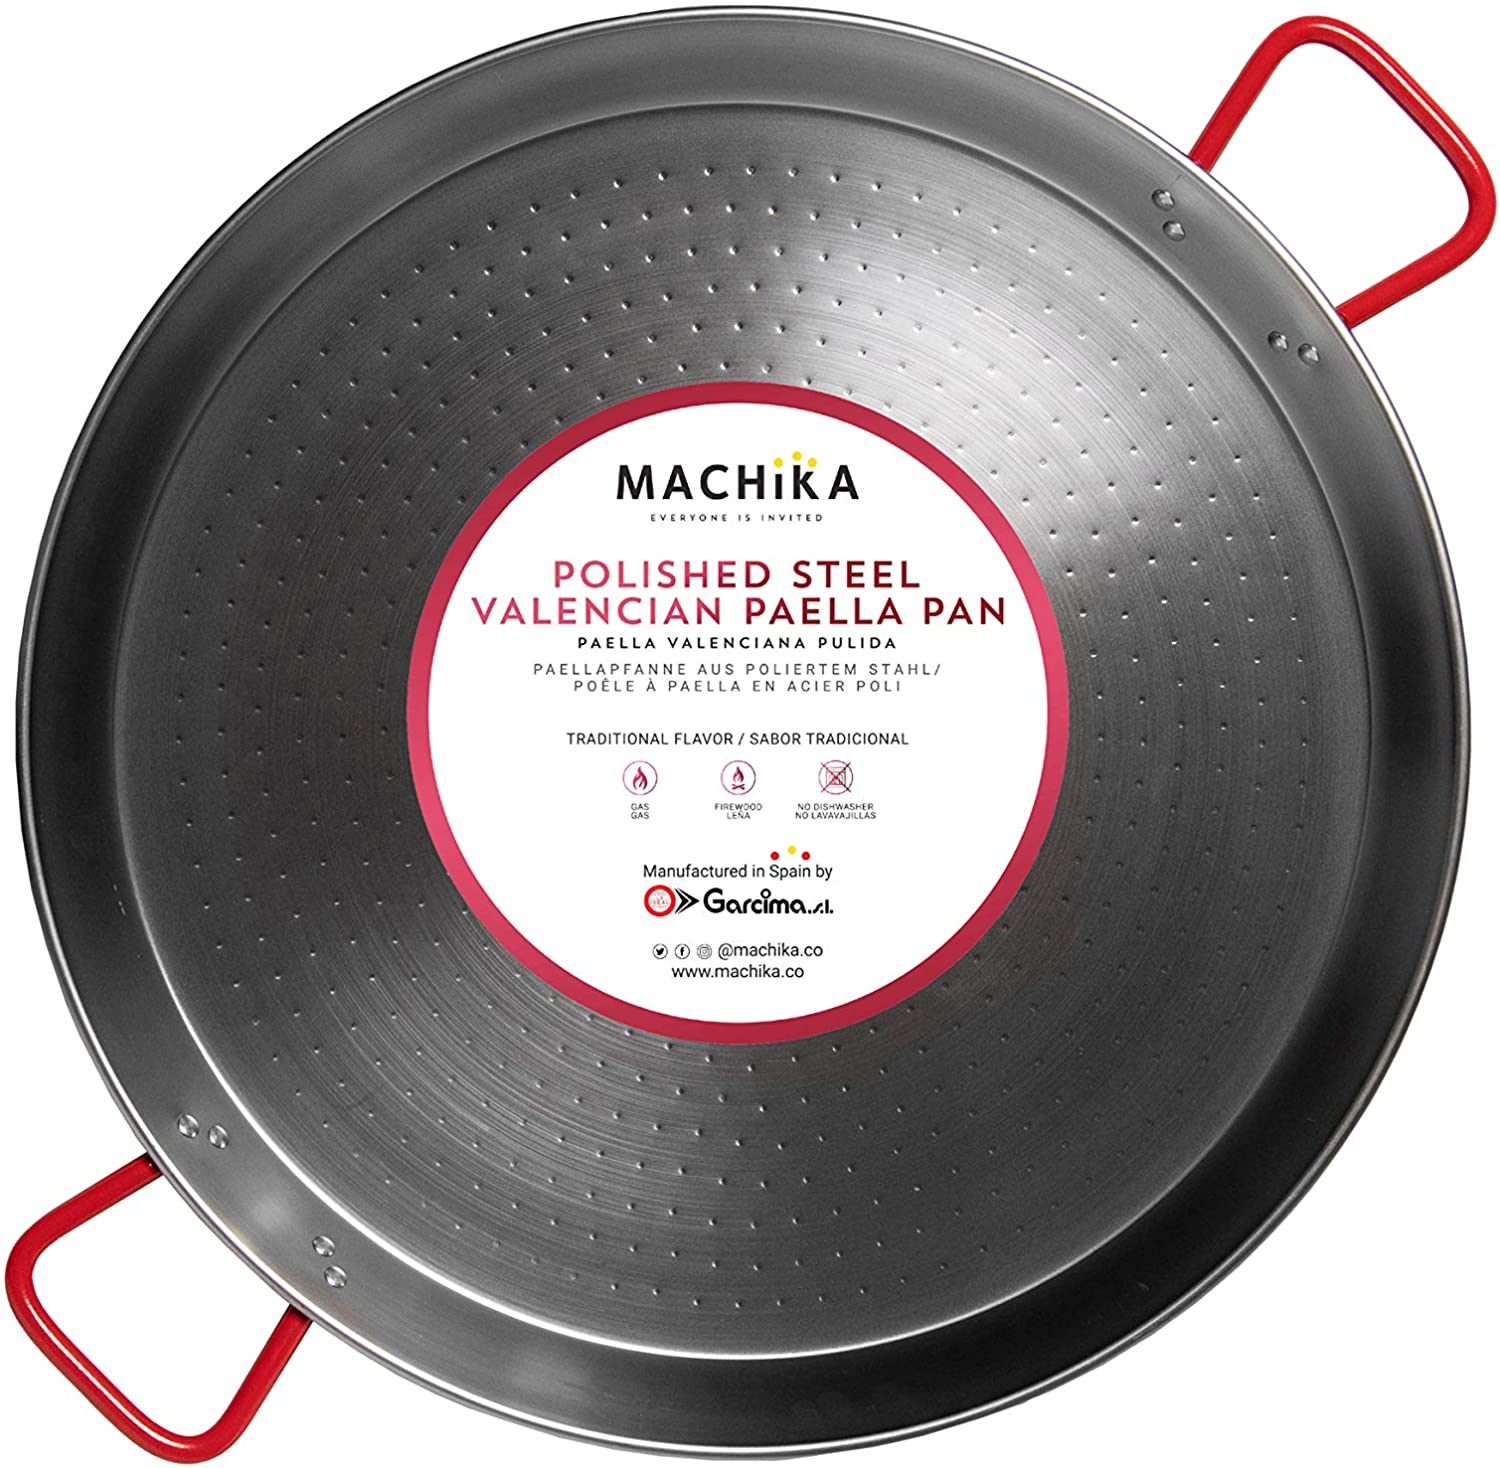 Machika Polished Steel Paella Pan 20 inch (50 cm)